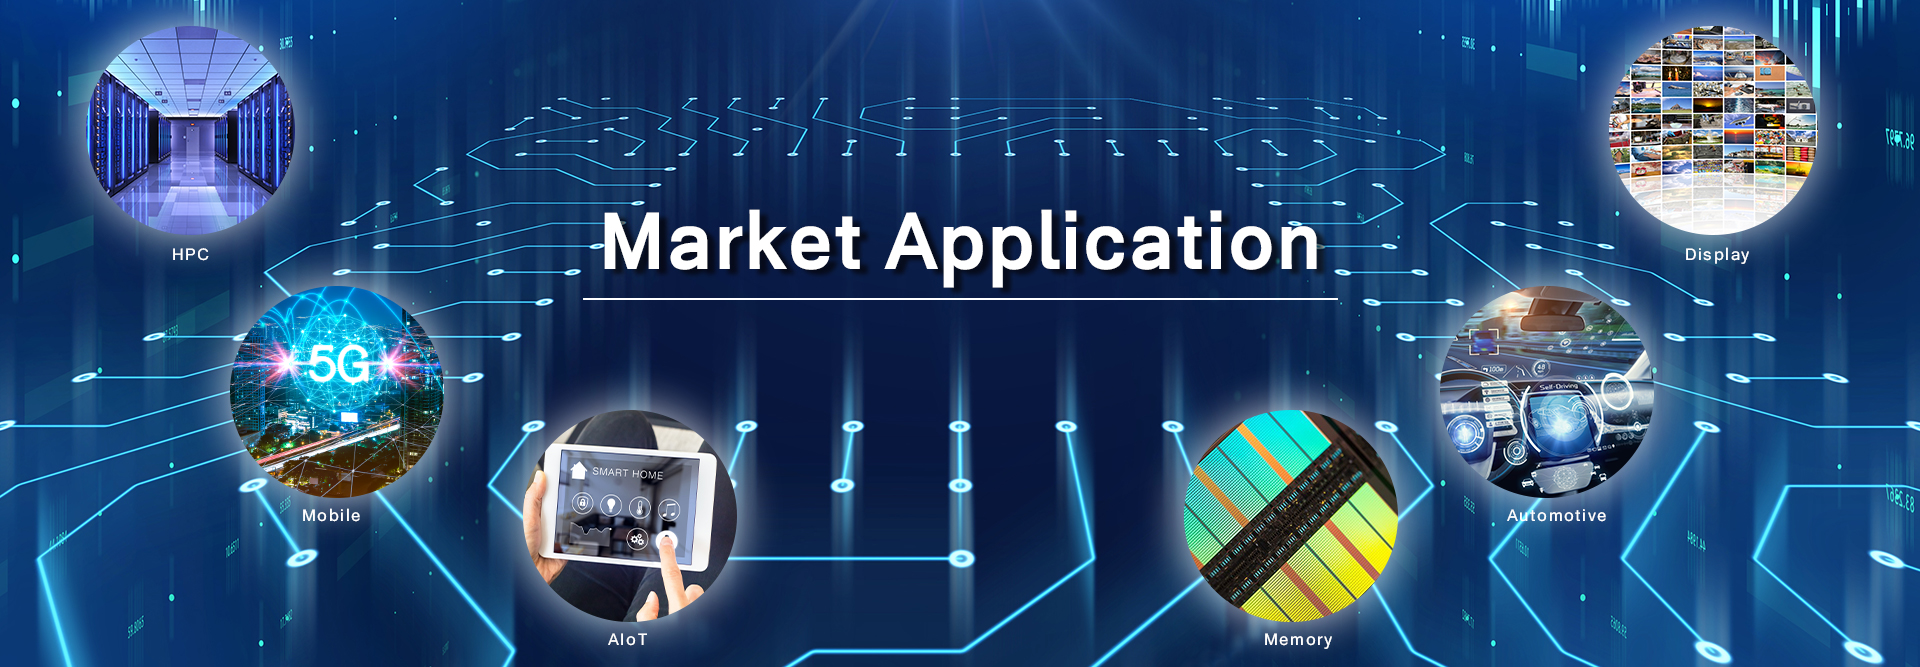 Market Application